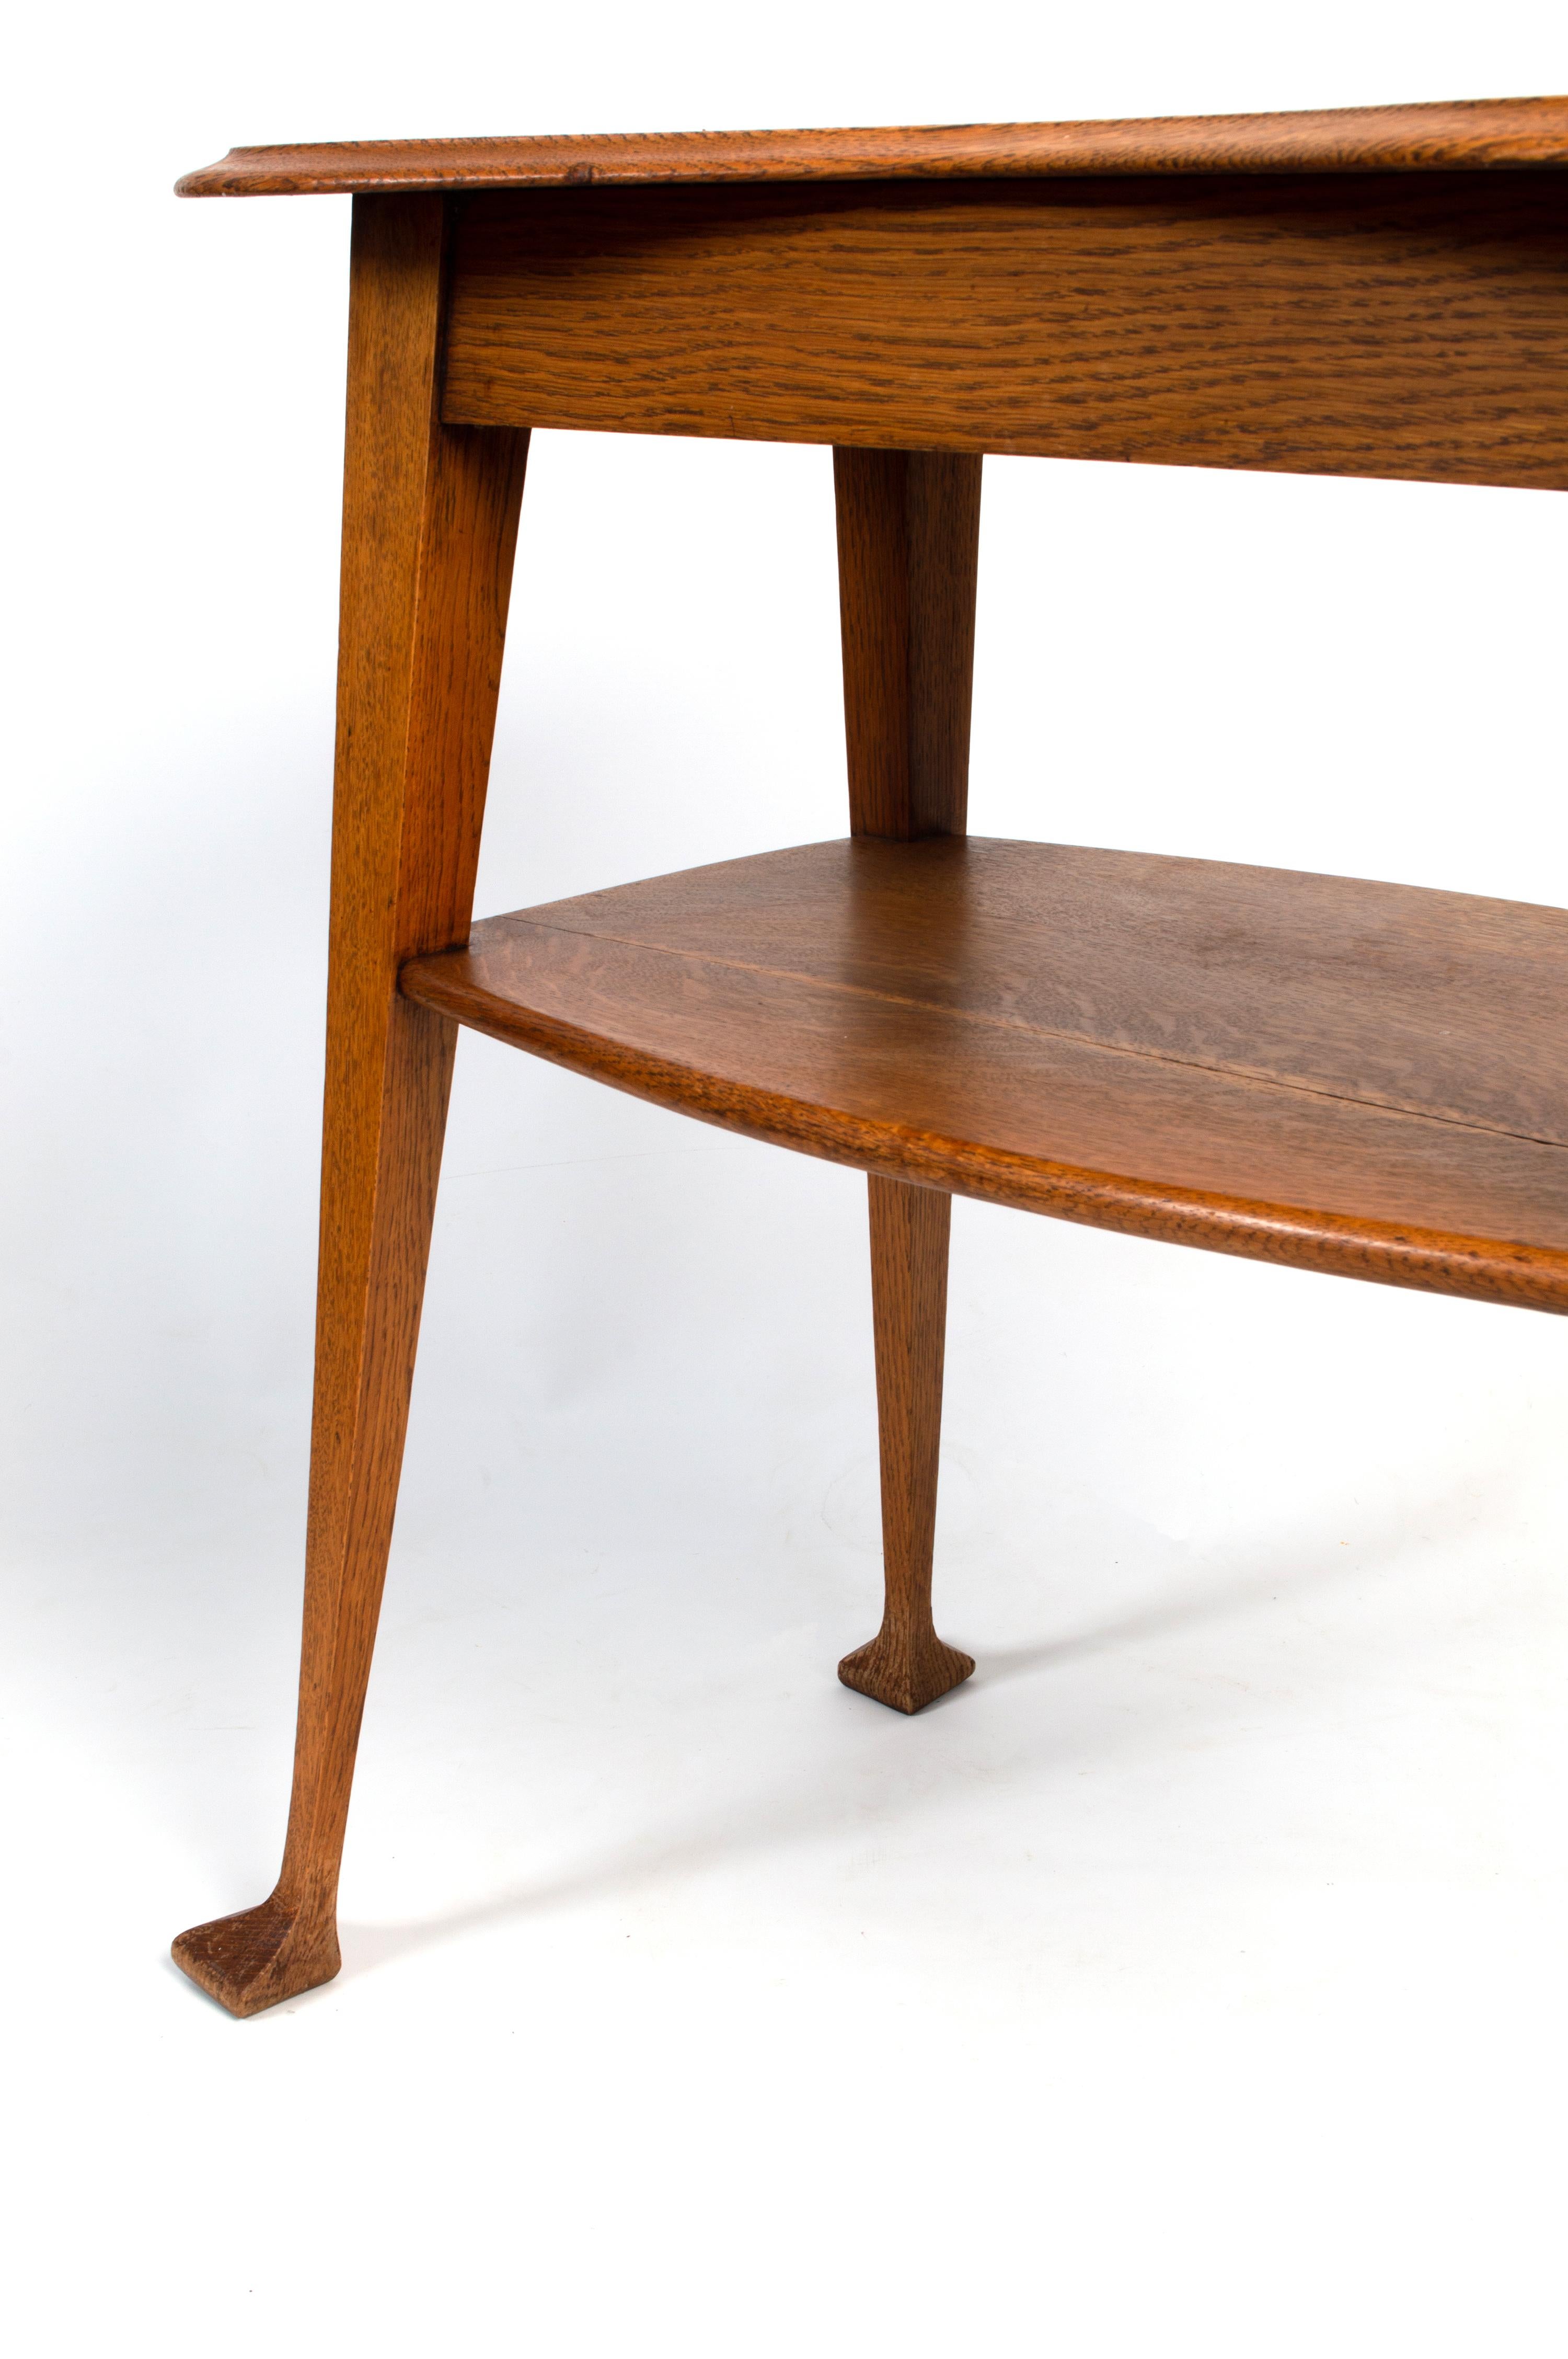 Antique English Shapland & Petter Arts & Crafts Golden Oak Side Table C.1890 For Sale 2